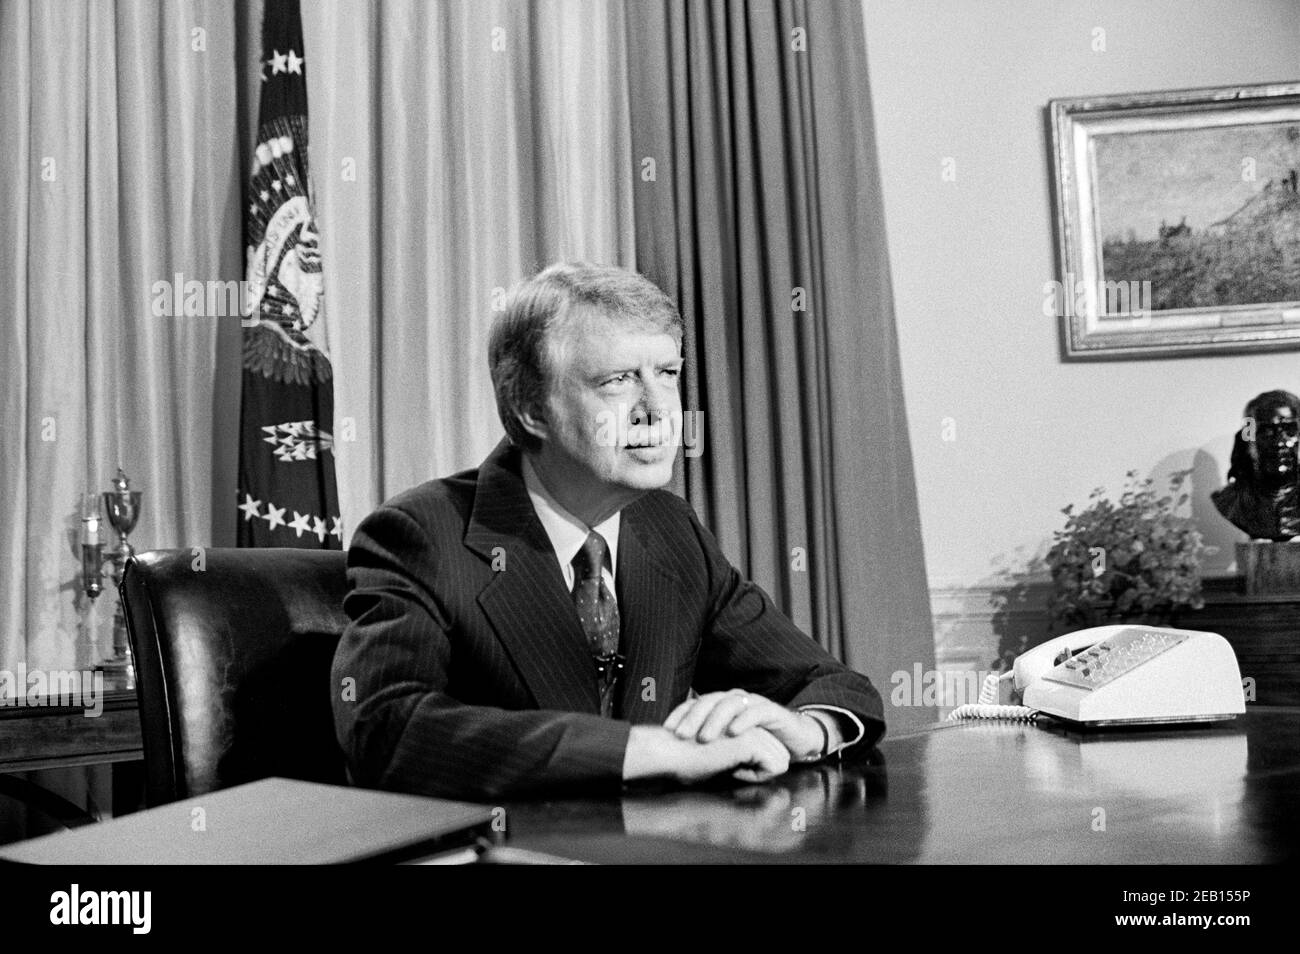 U.S. President Jimmy Carter in Oval Office during TV Speech, White House, Washington, D.C., USA, Warren K. Leffler, April 18, 1977 Stock Photo